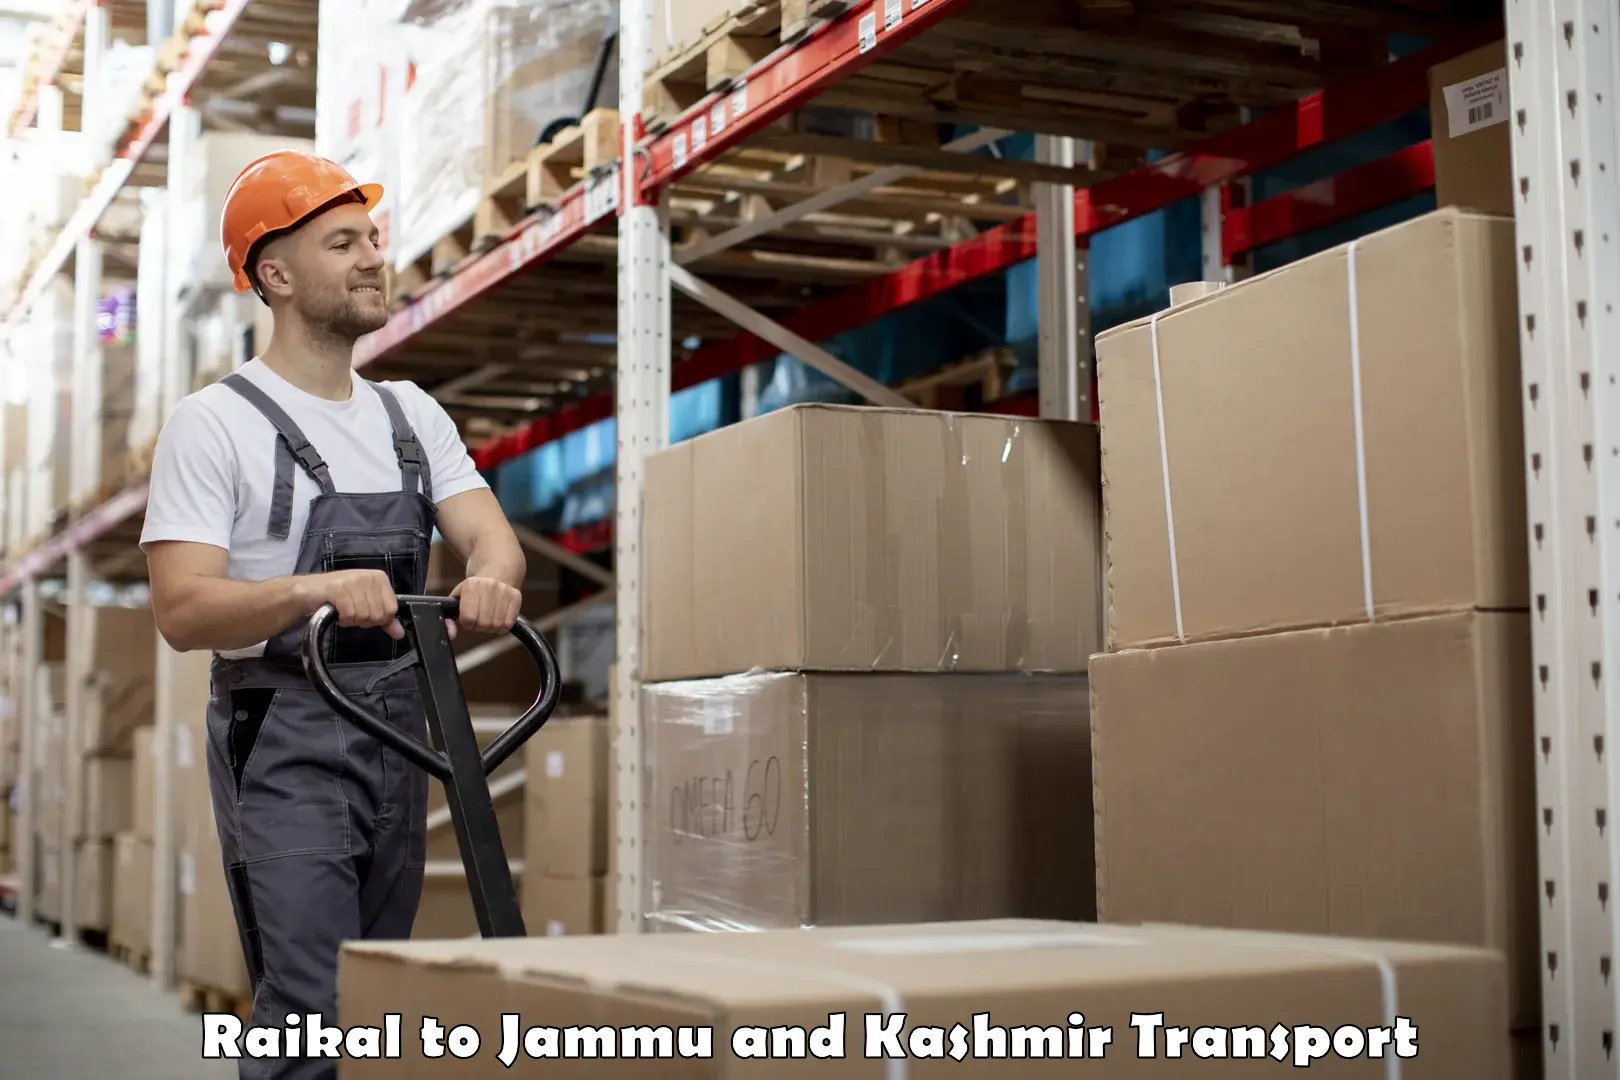 Furniture transport service Raikal to Shopian